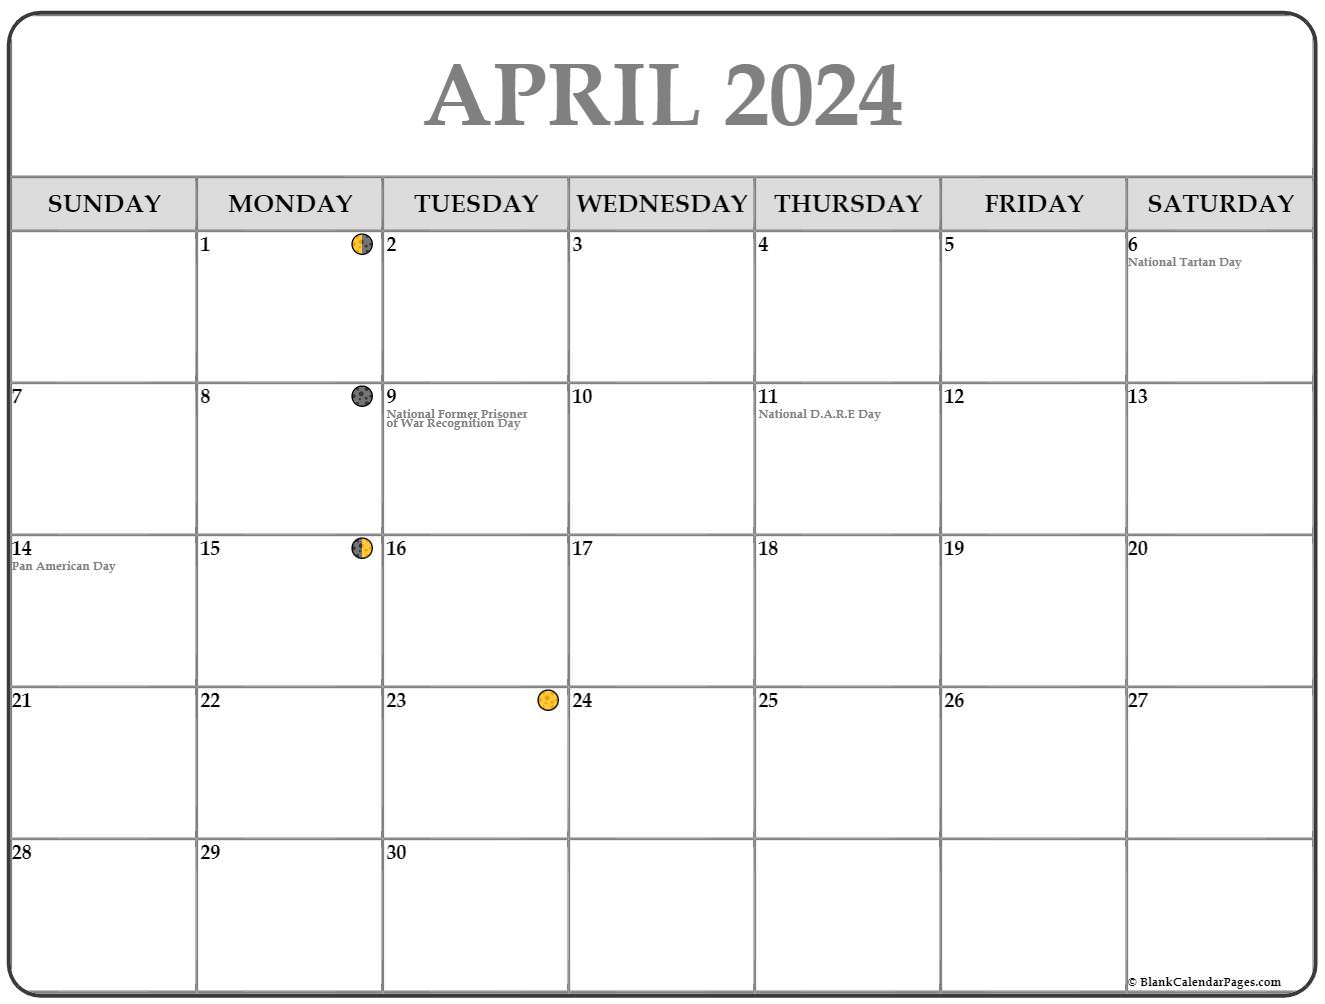 April 2024 Lunar Calendar | Moon Phase Calendar